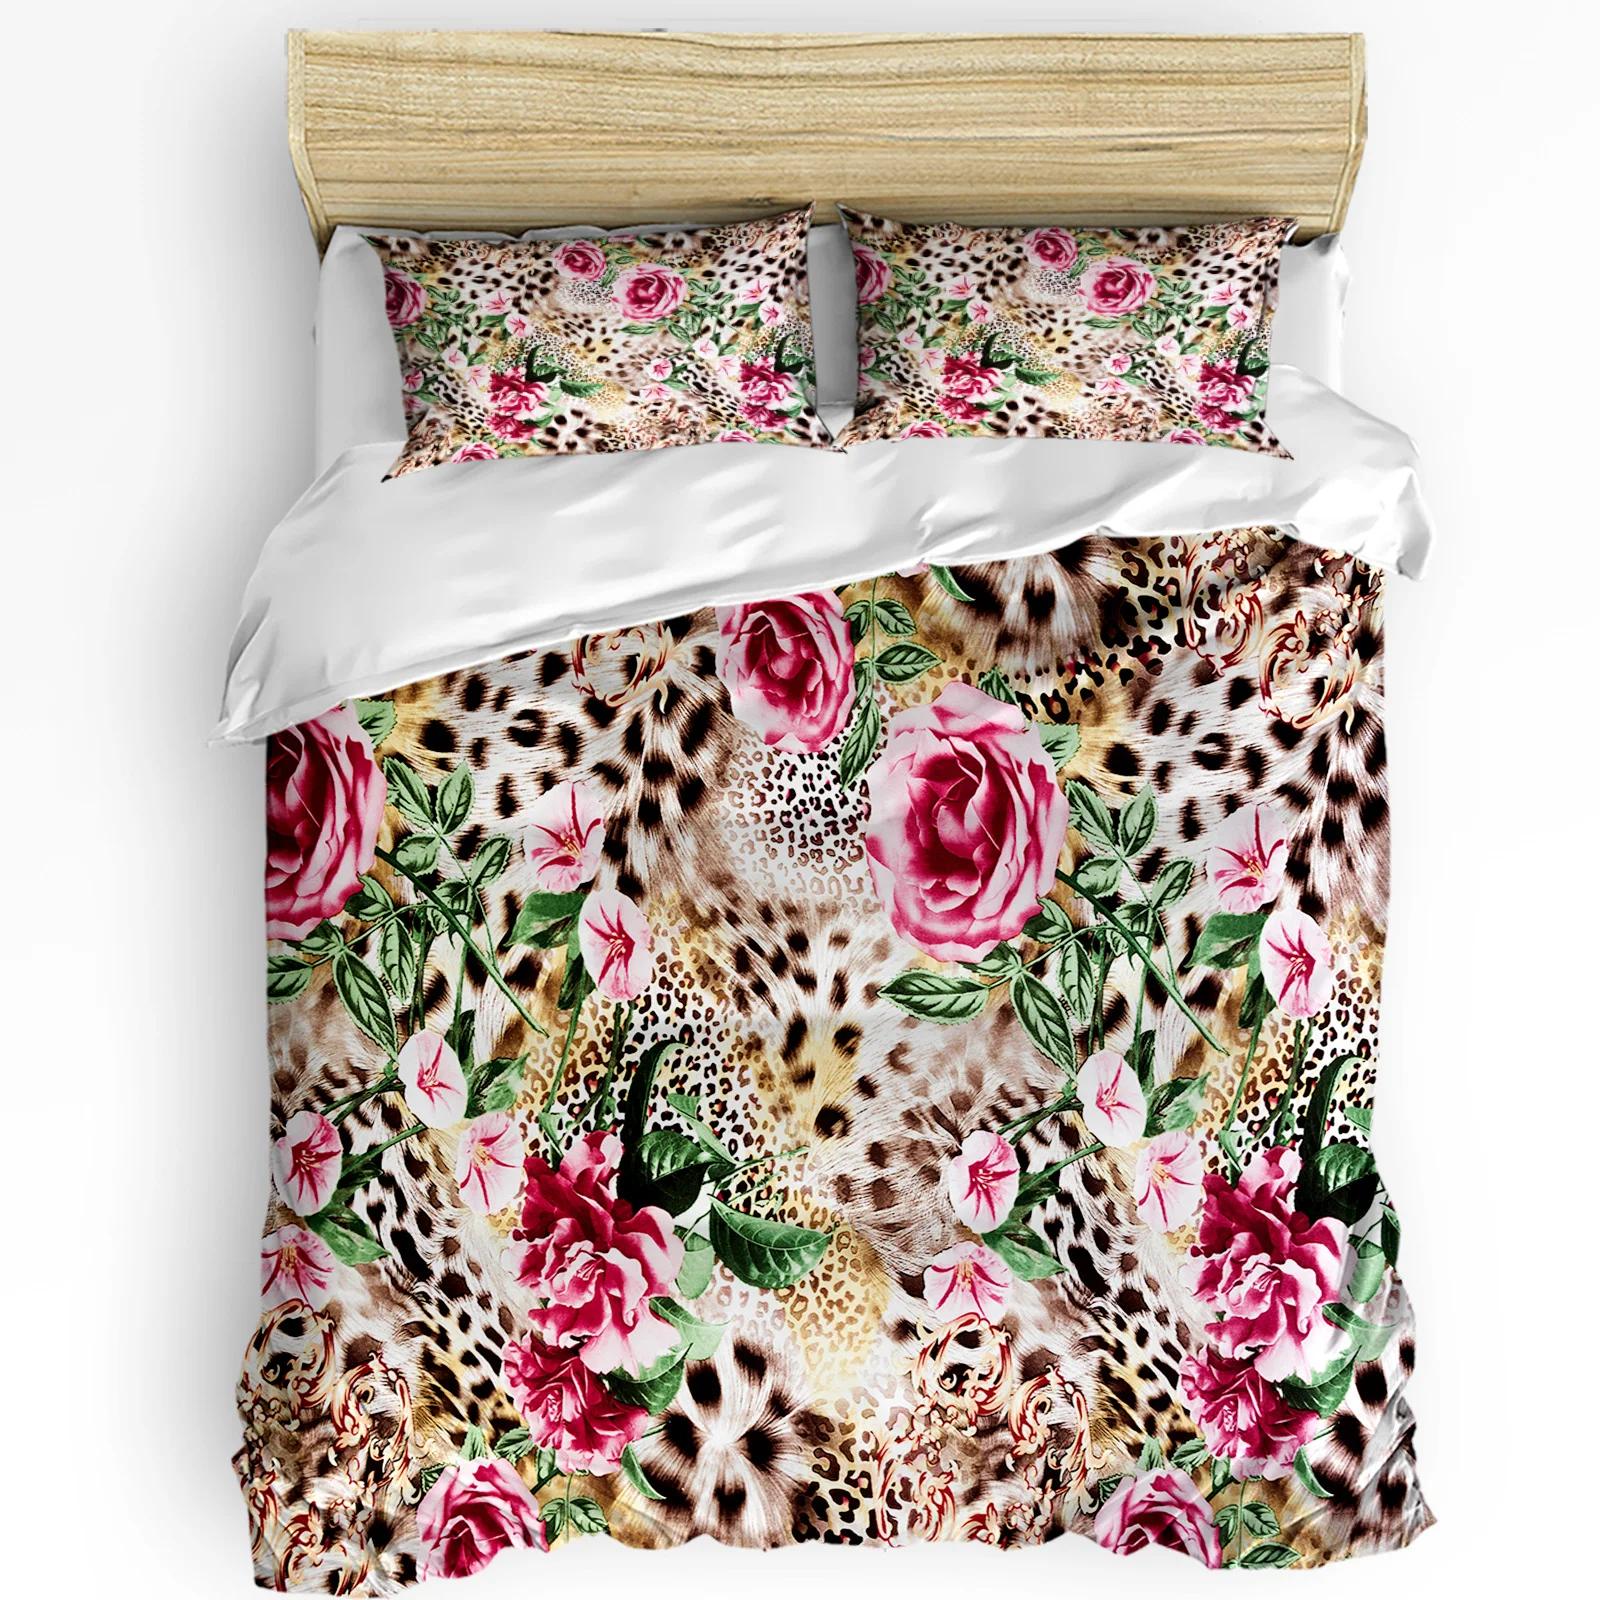 Leopard Rose Art Flower Bedding Set 3pcs Boys Girls Duvet Cover Pillowcase Kids Adult Quilt Cover Double Bed Set Hom